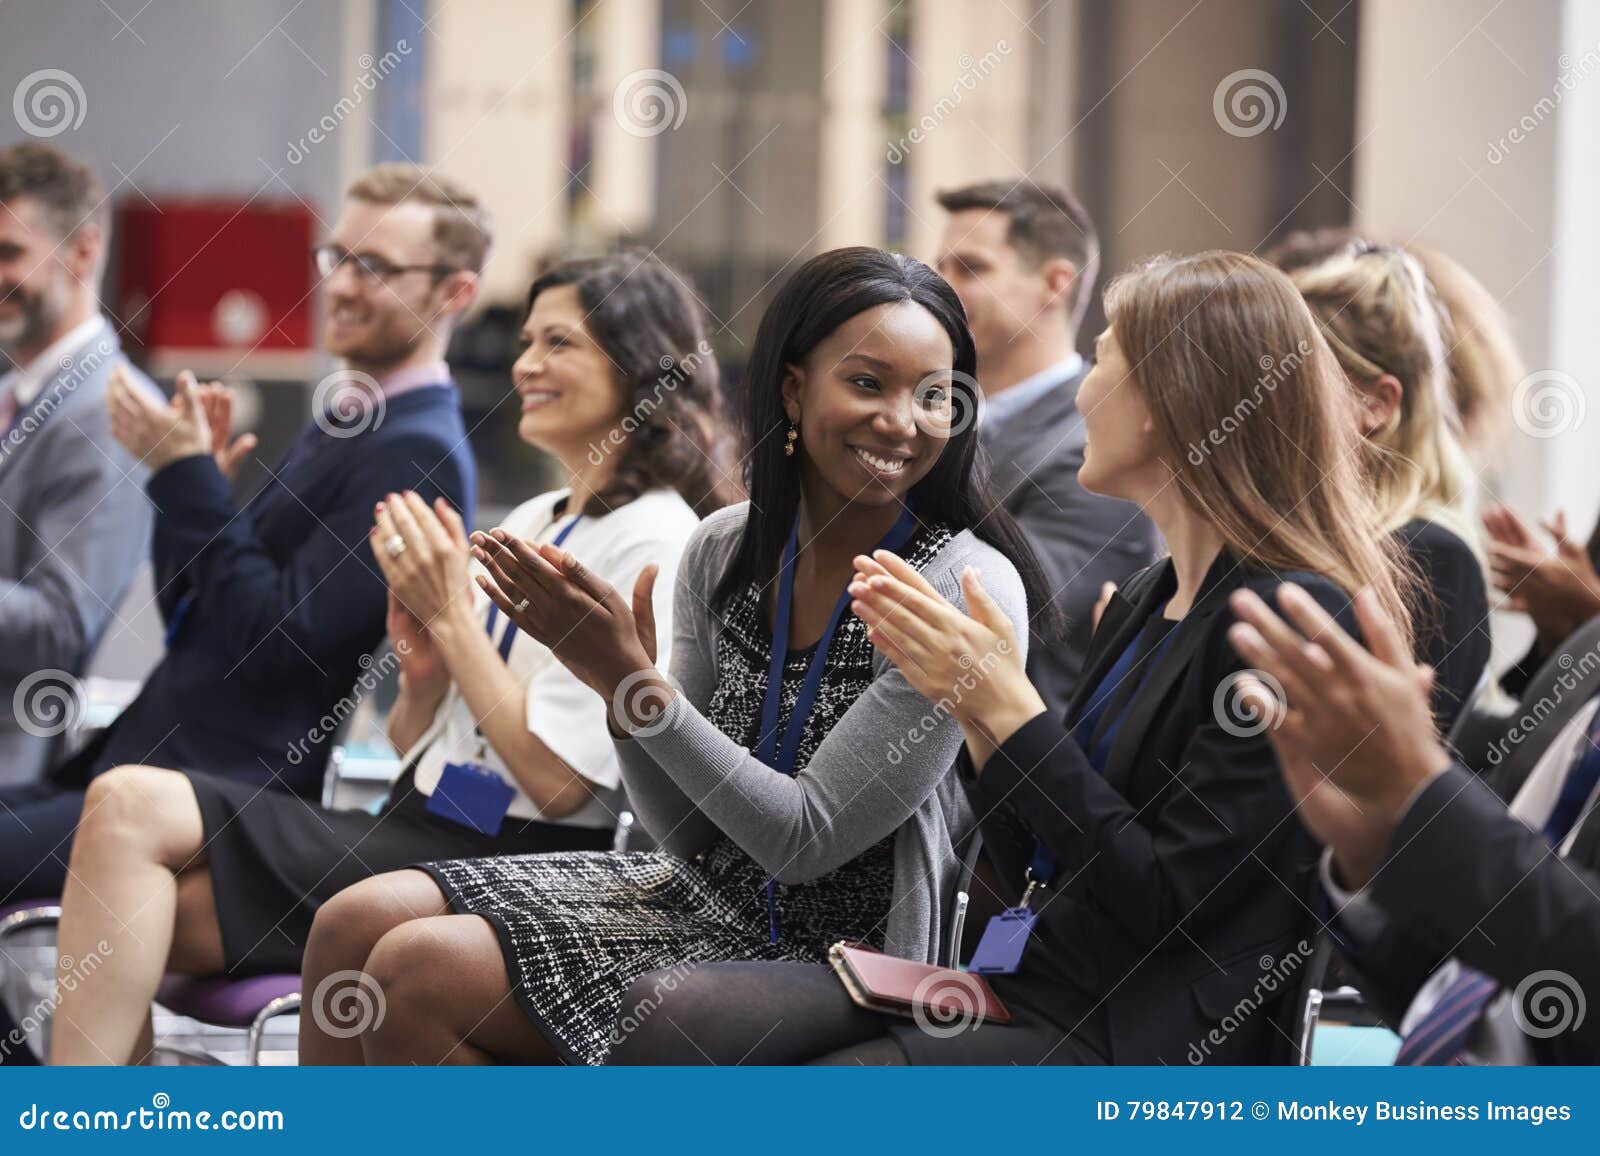 audience applauding speaker after conference presentation